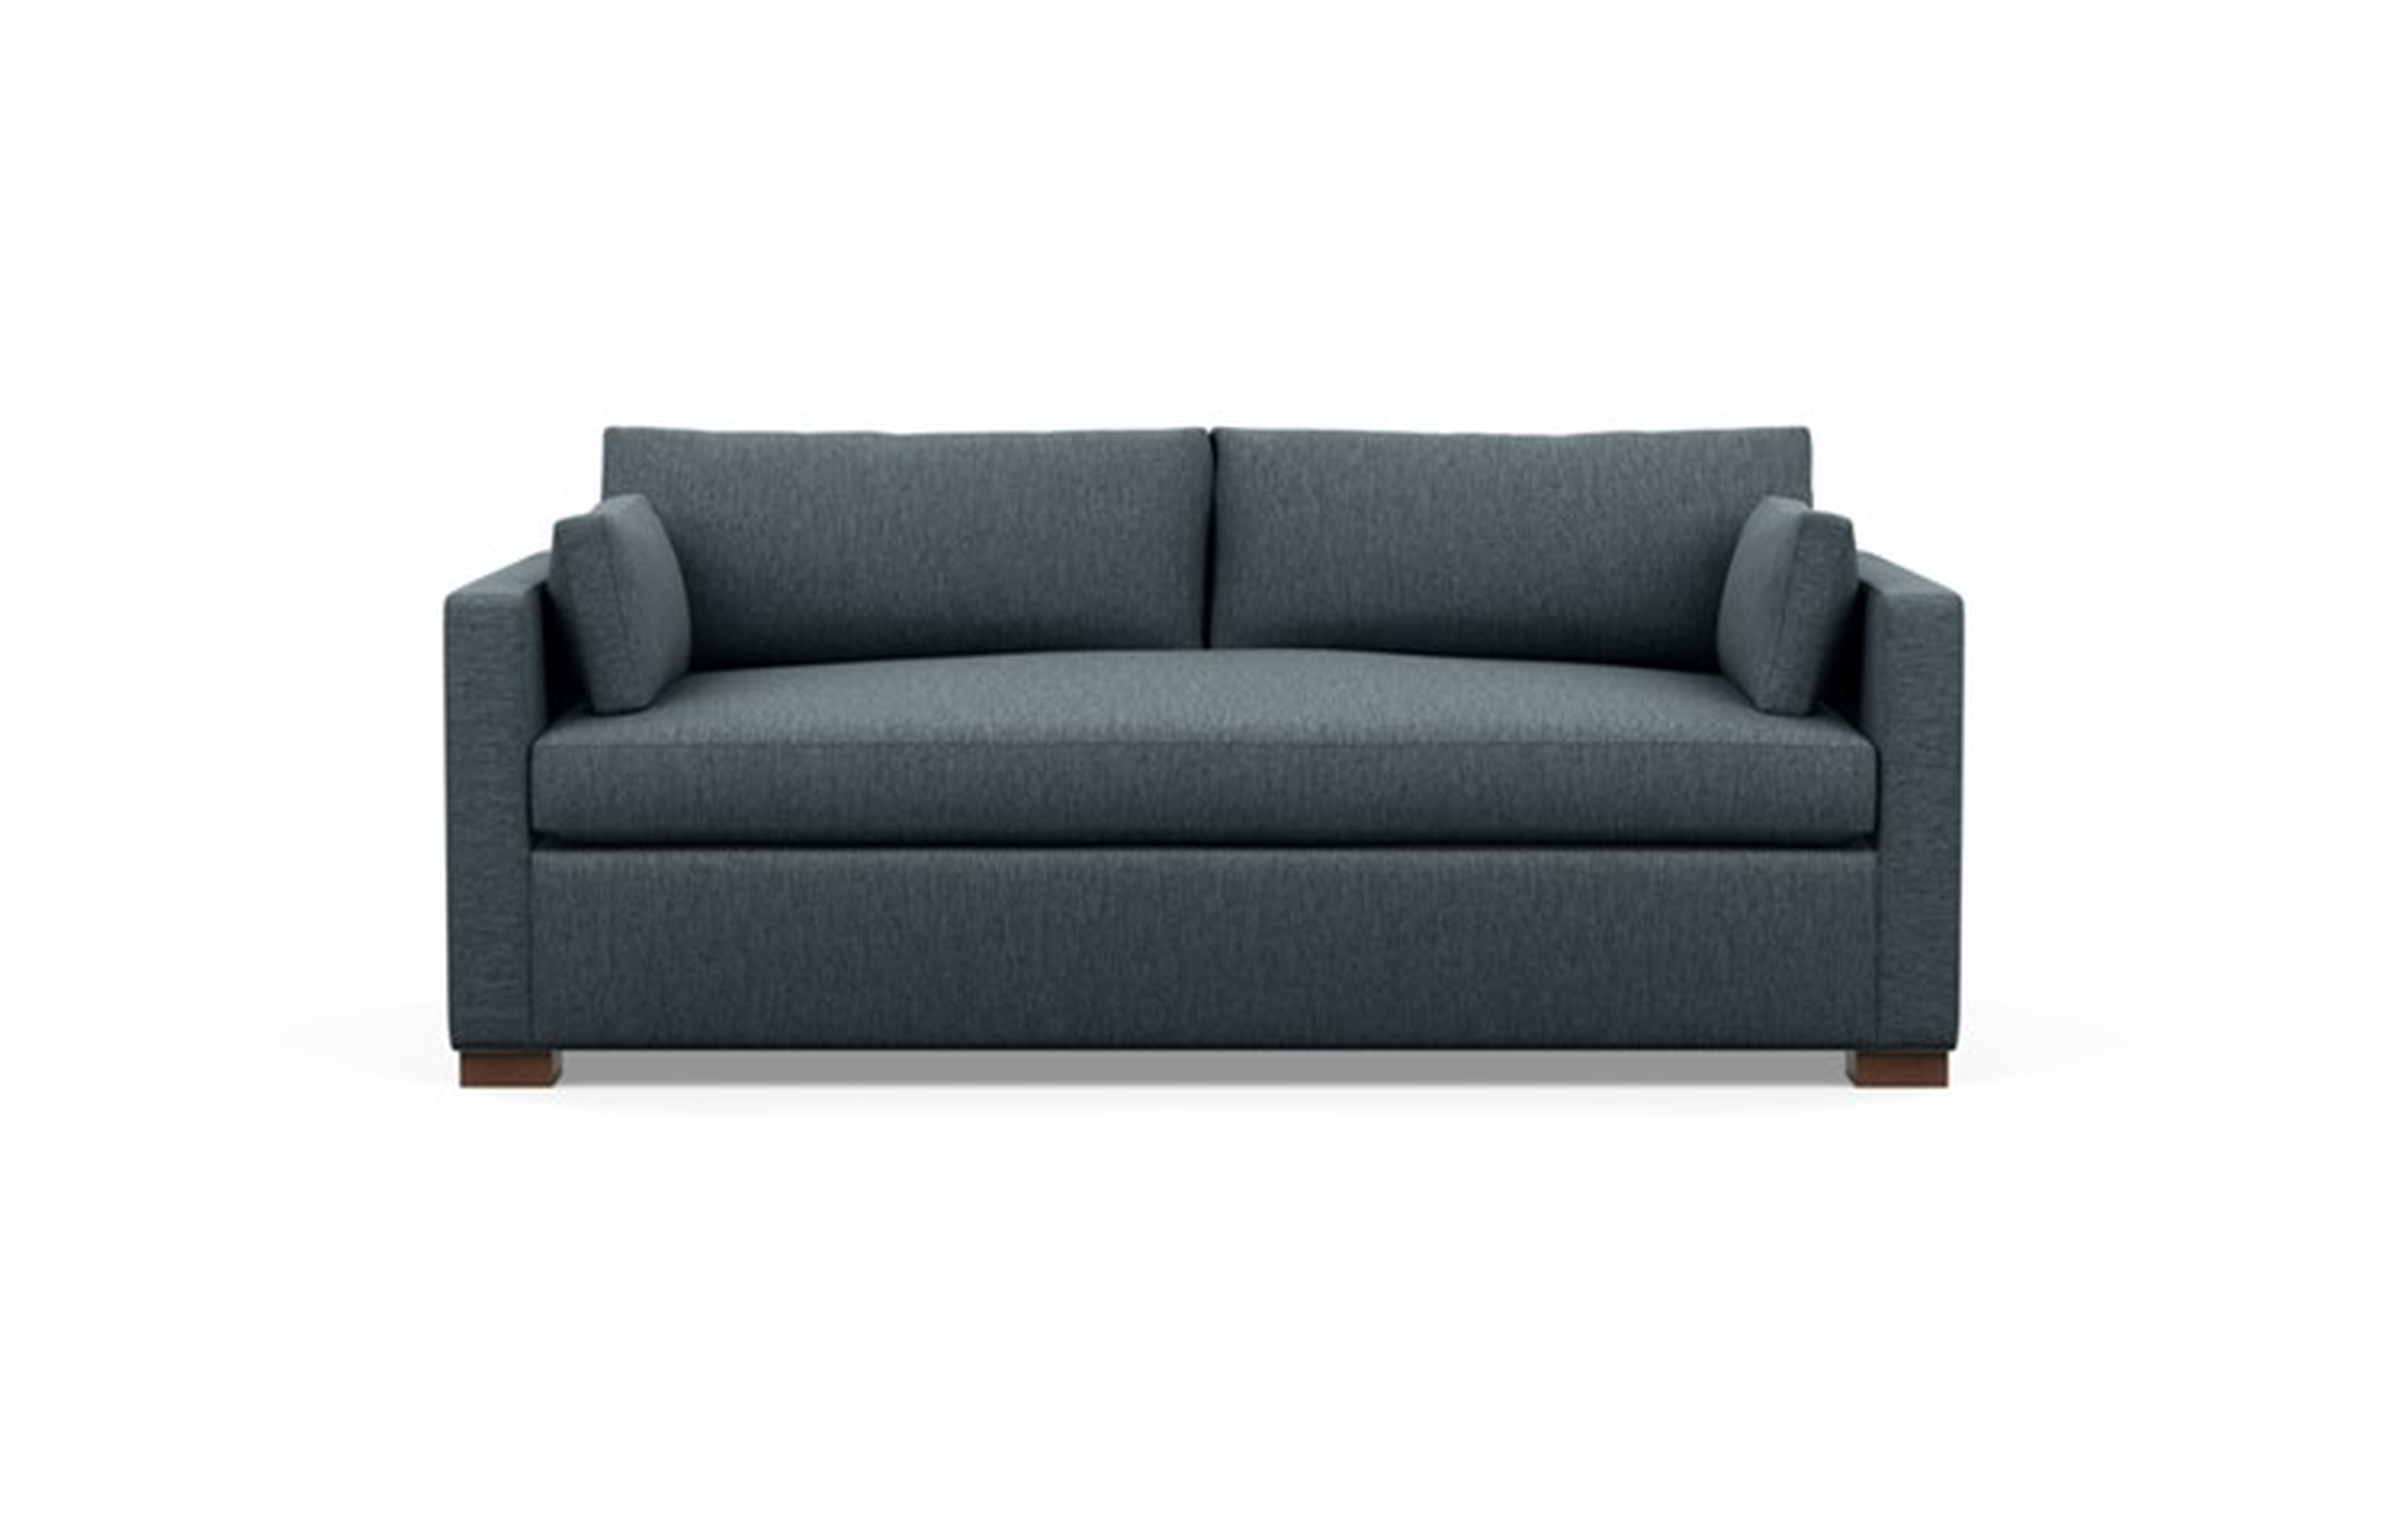 CHARLY Fabric Sofa - Interior Define